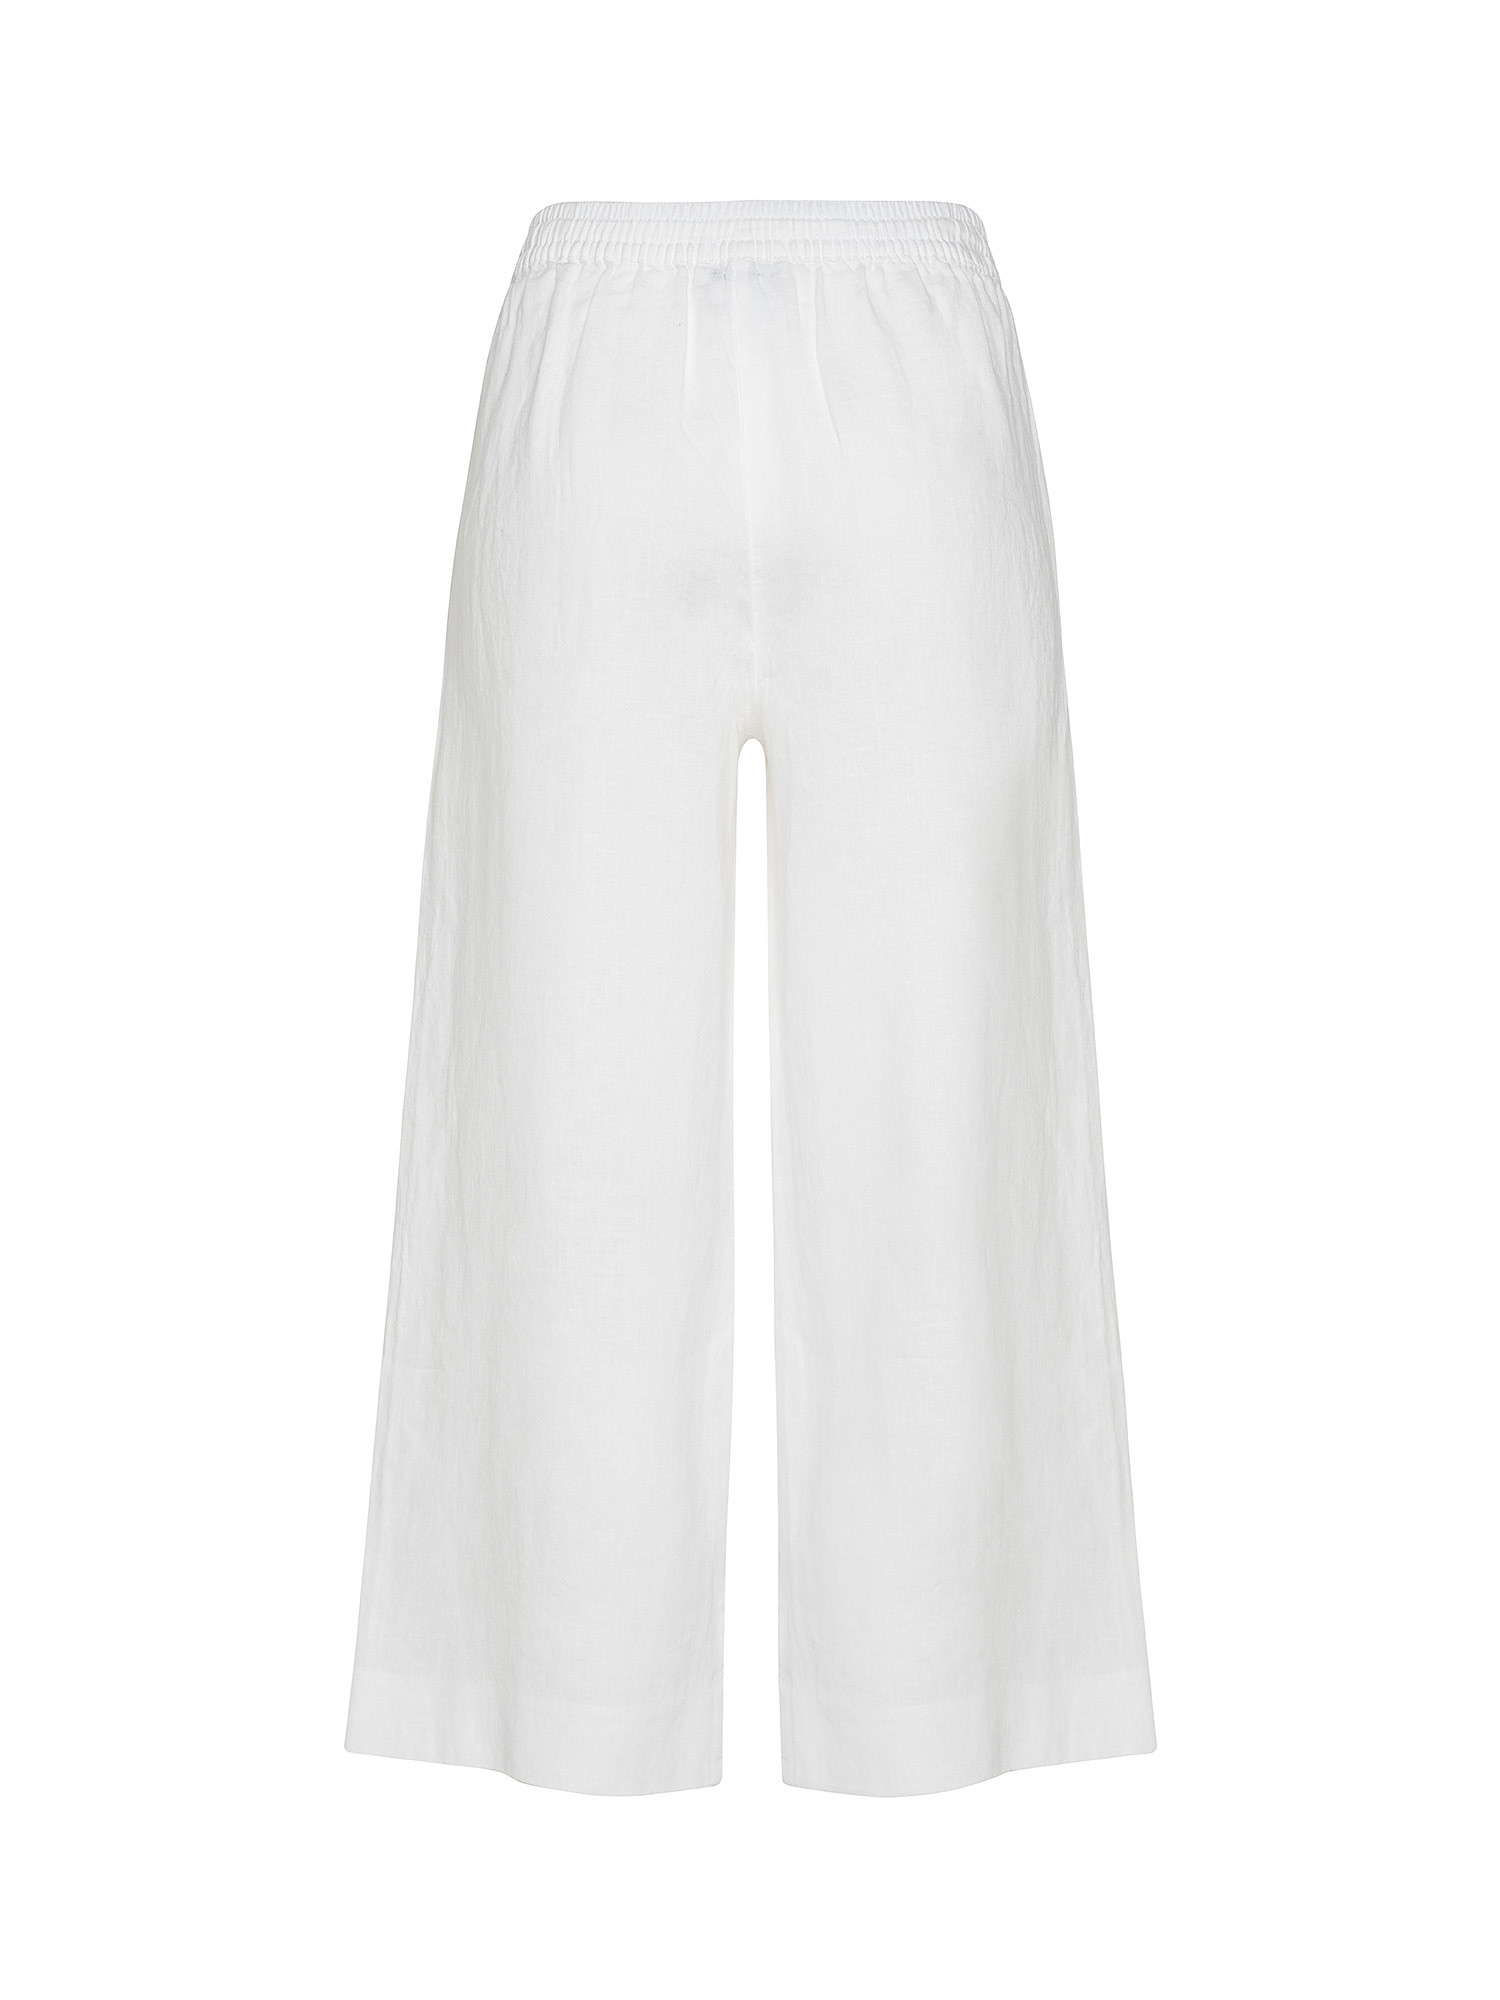 Pantalone a gamba ampia in lino, Bianco, large image number 1